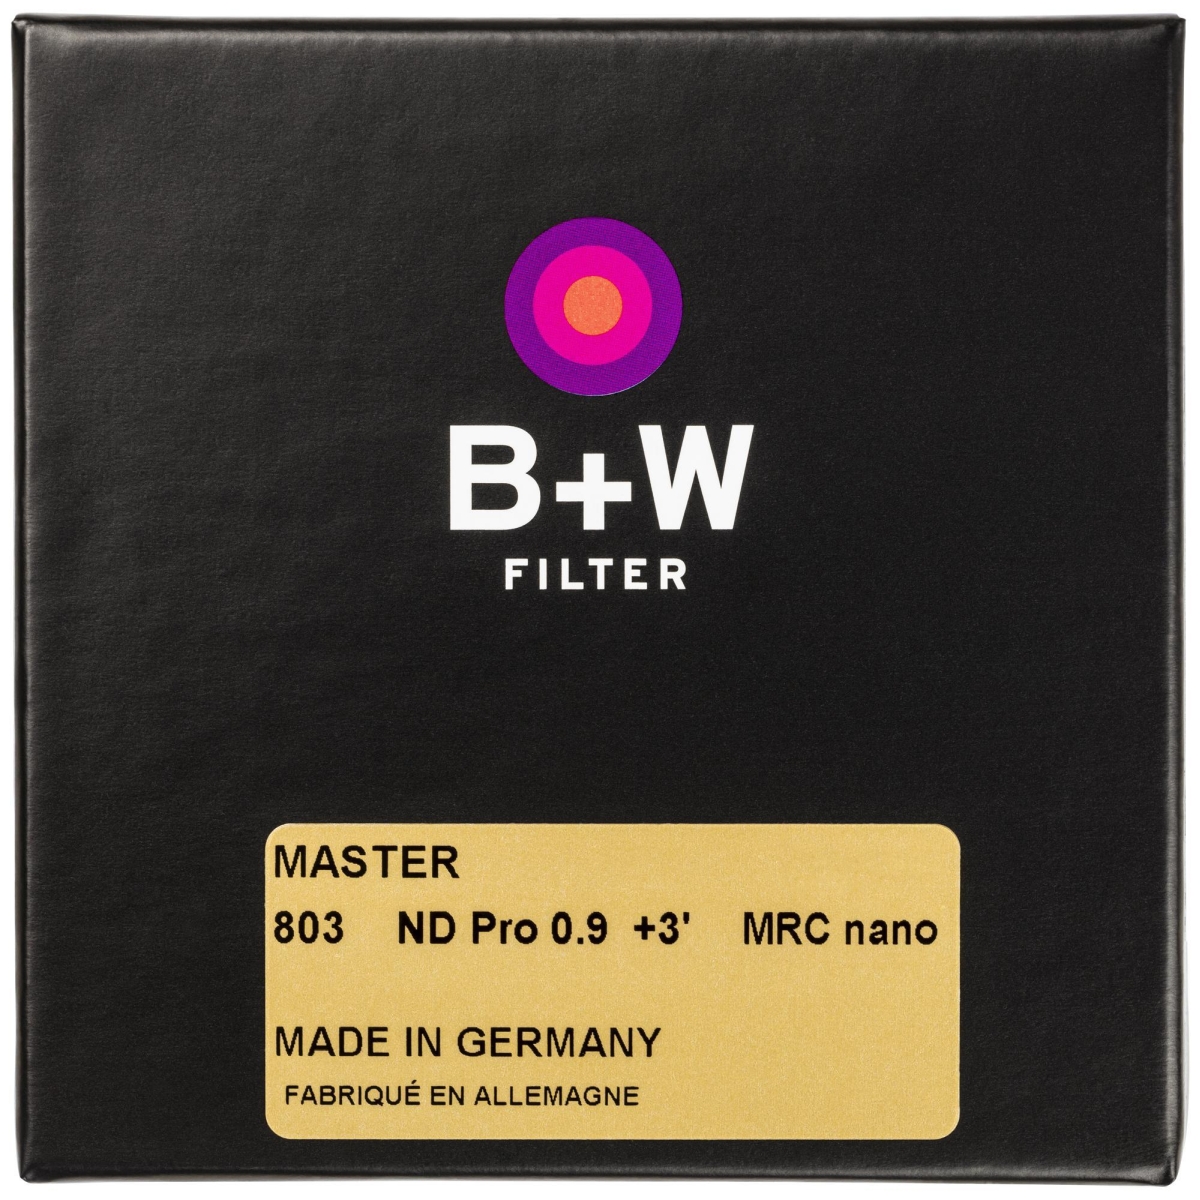 B+W Graufilter 43 mm ND 0,9 Master